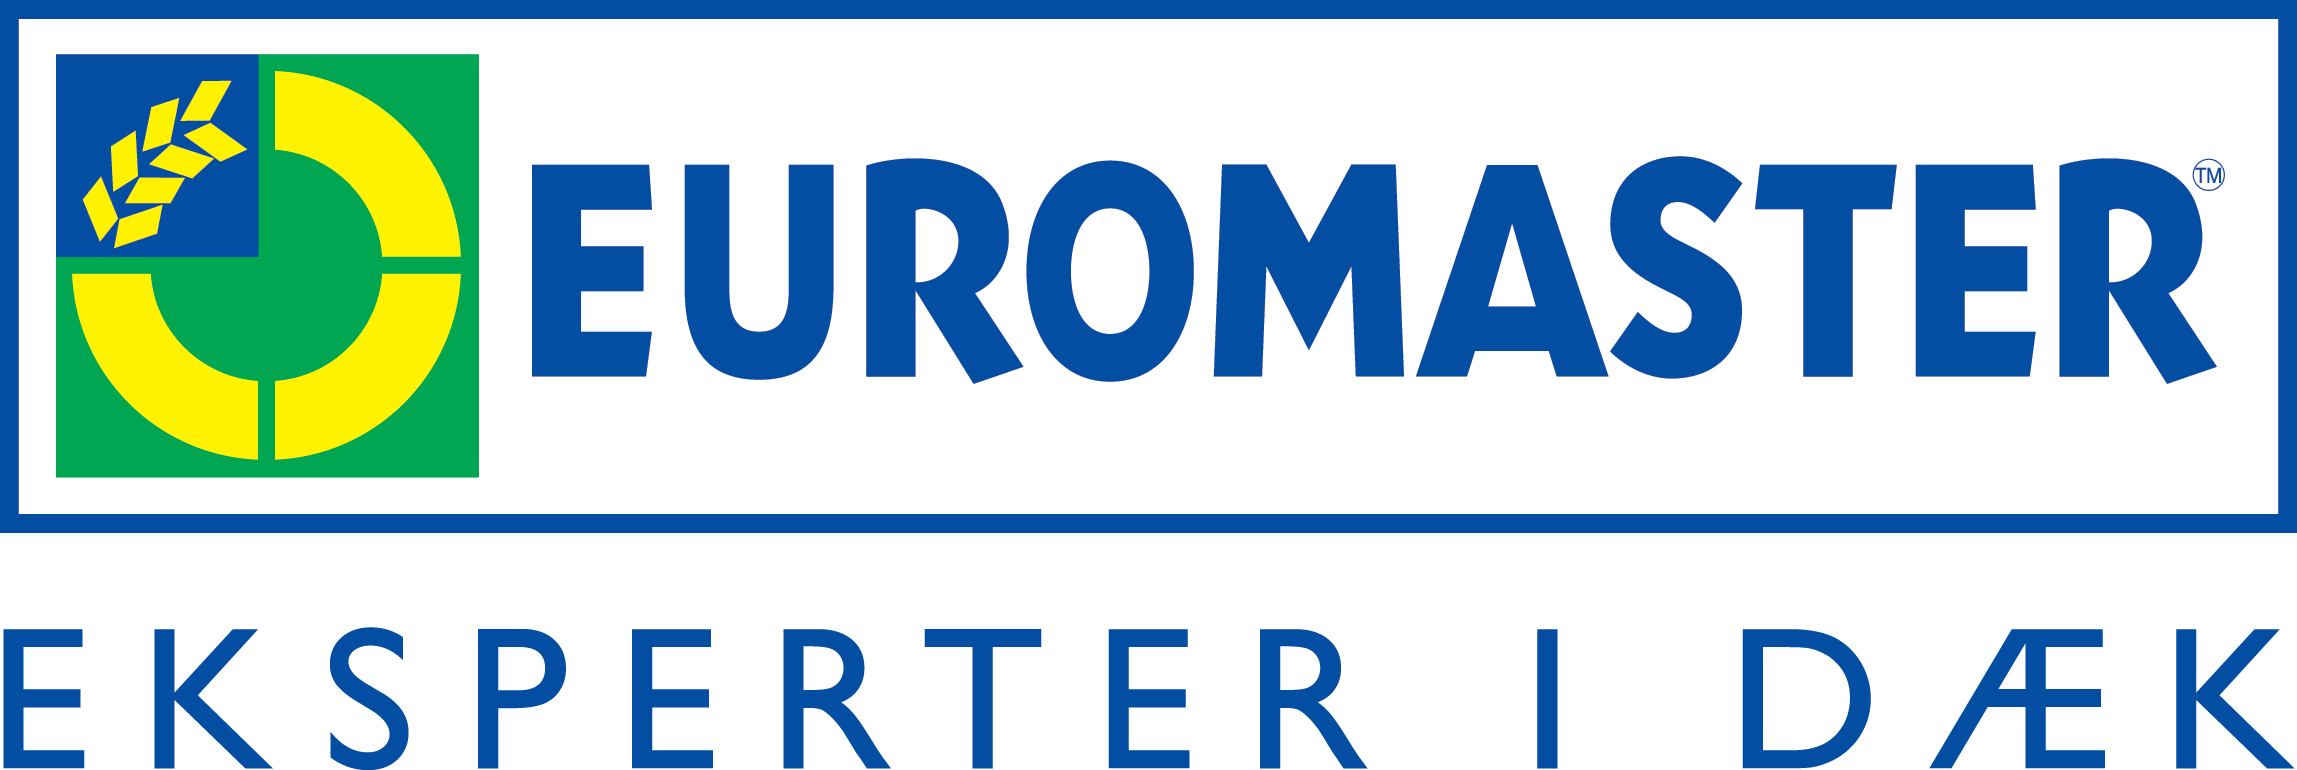 Euromaster Holbæk gammel logo